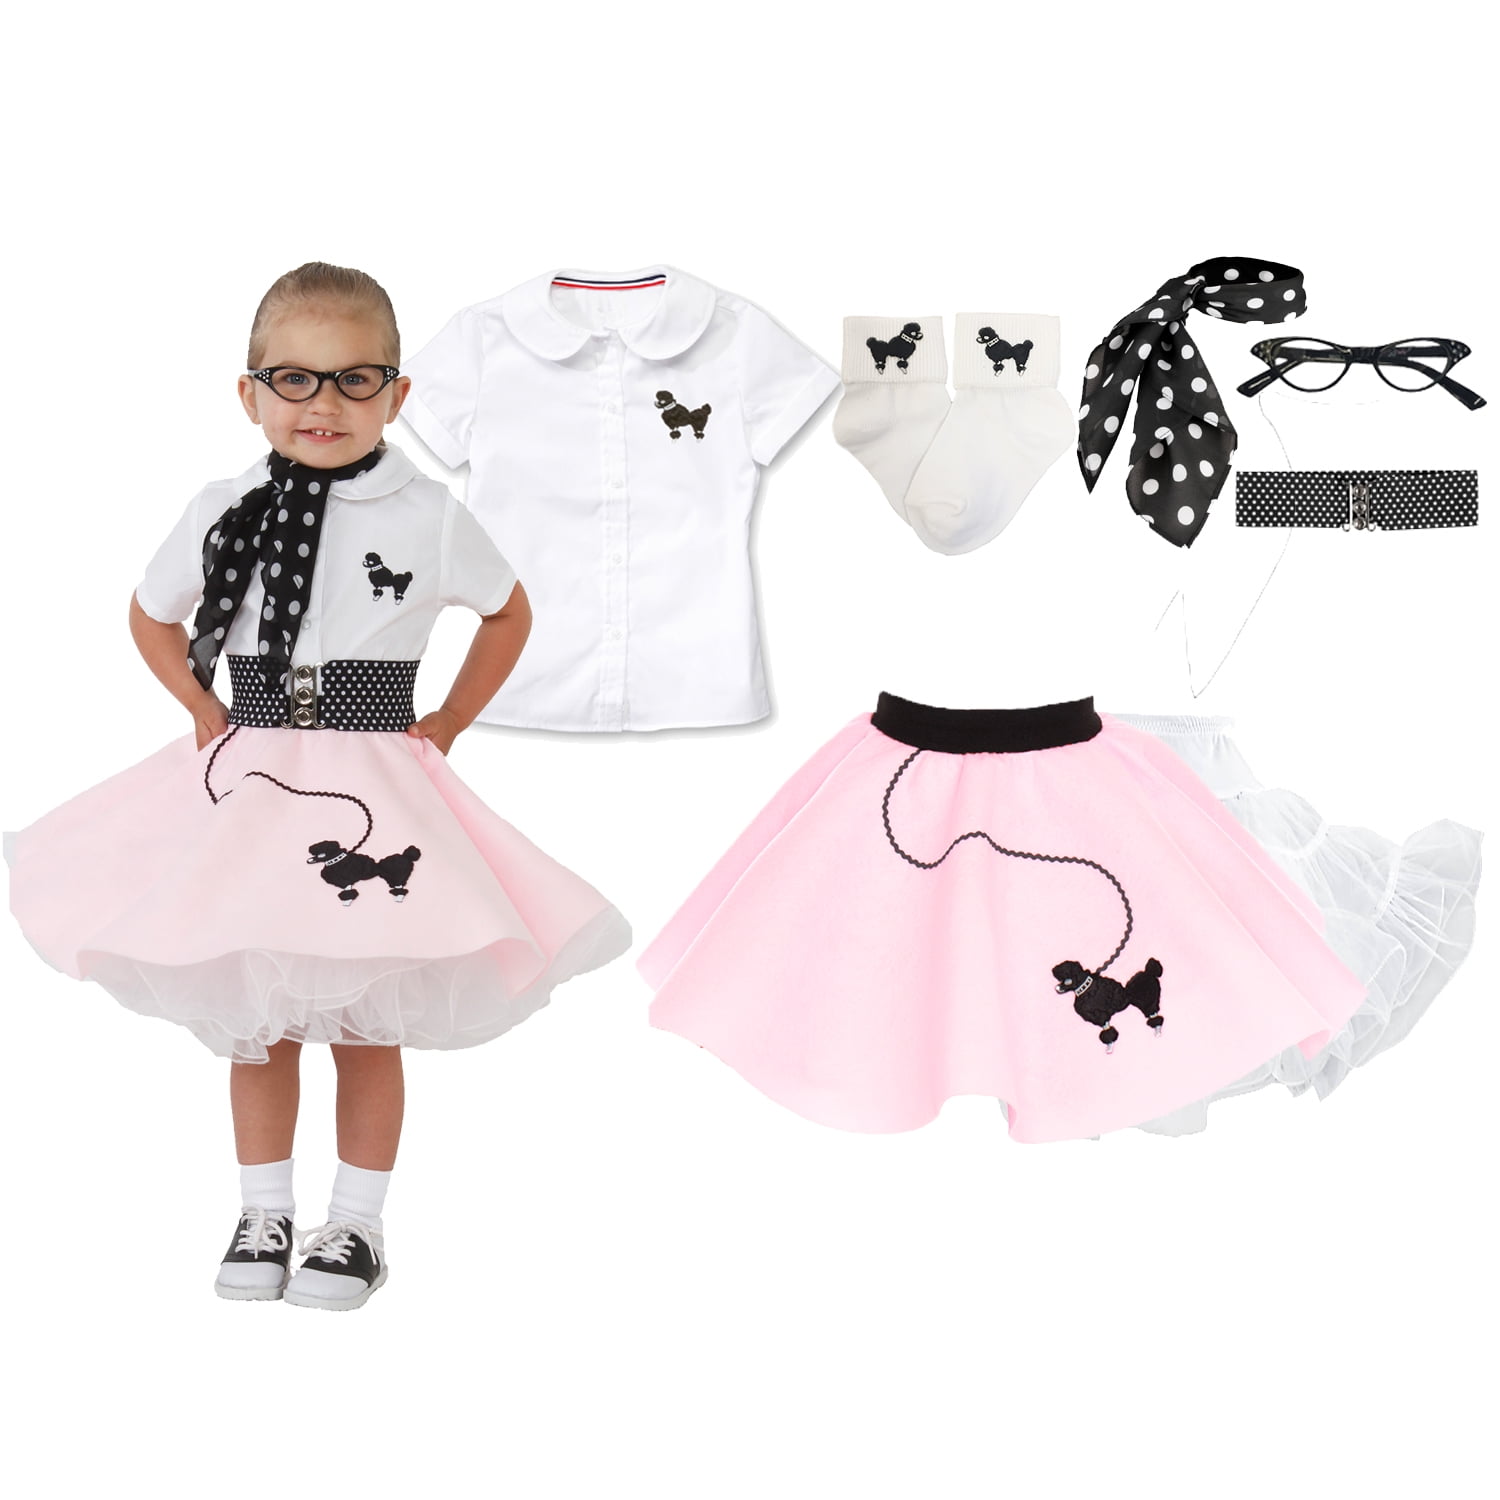 1950s 2.5" Toddler Cinch Belt Sock Hop Poodle Skirt Costume Party Accessory 